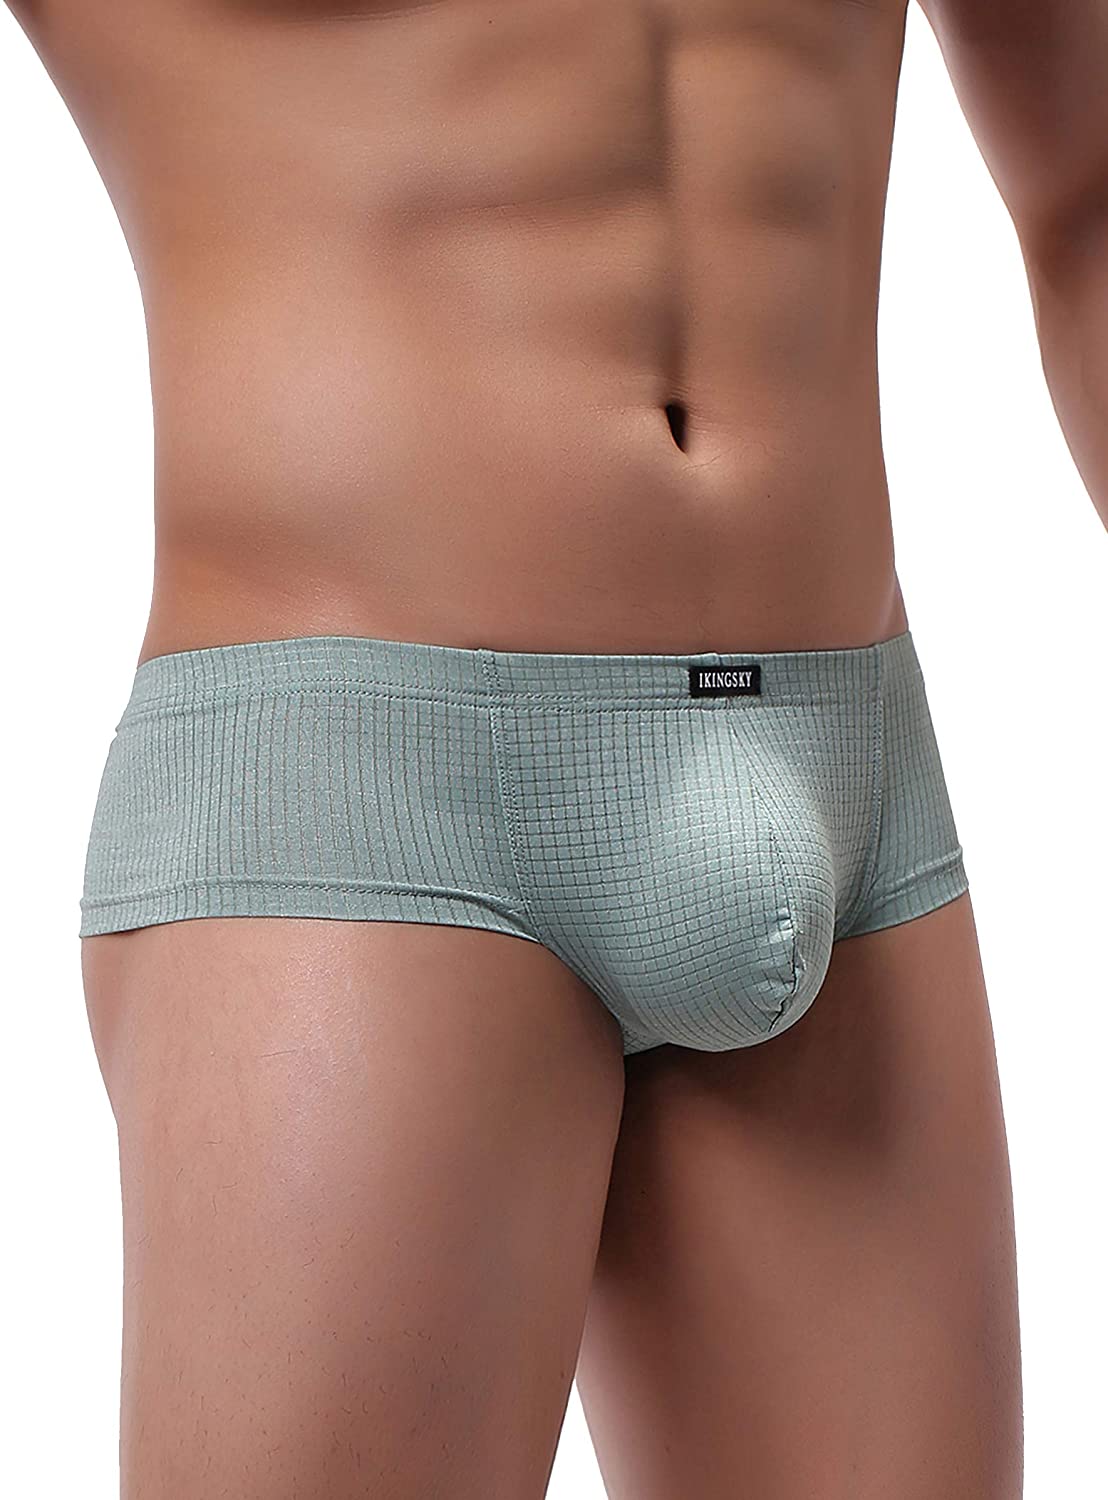 Ikingsky Mens Cheeky Thong Underwear Mini Cheek Pouch Boxer Briefs Sexy Brazili Ebay